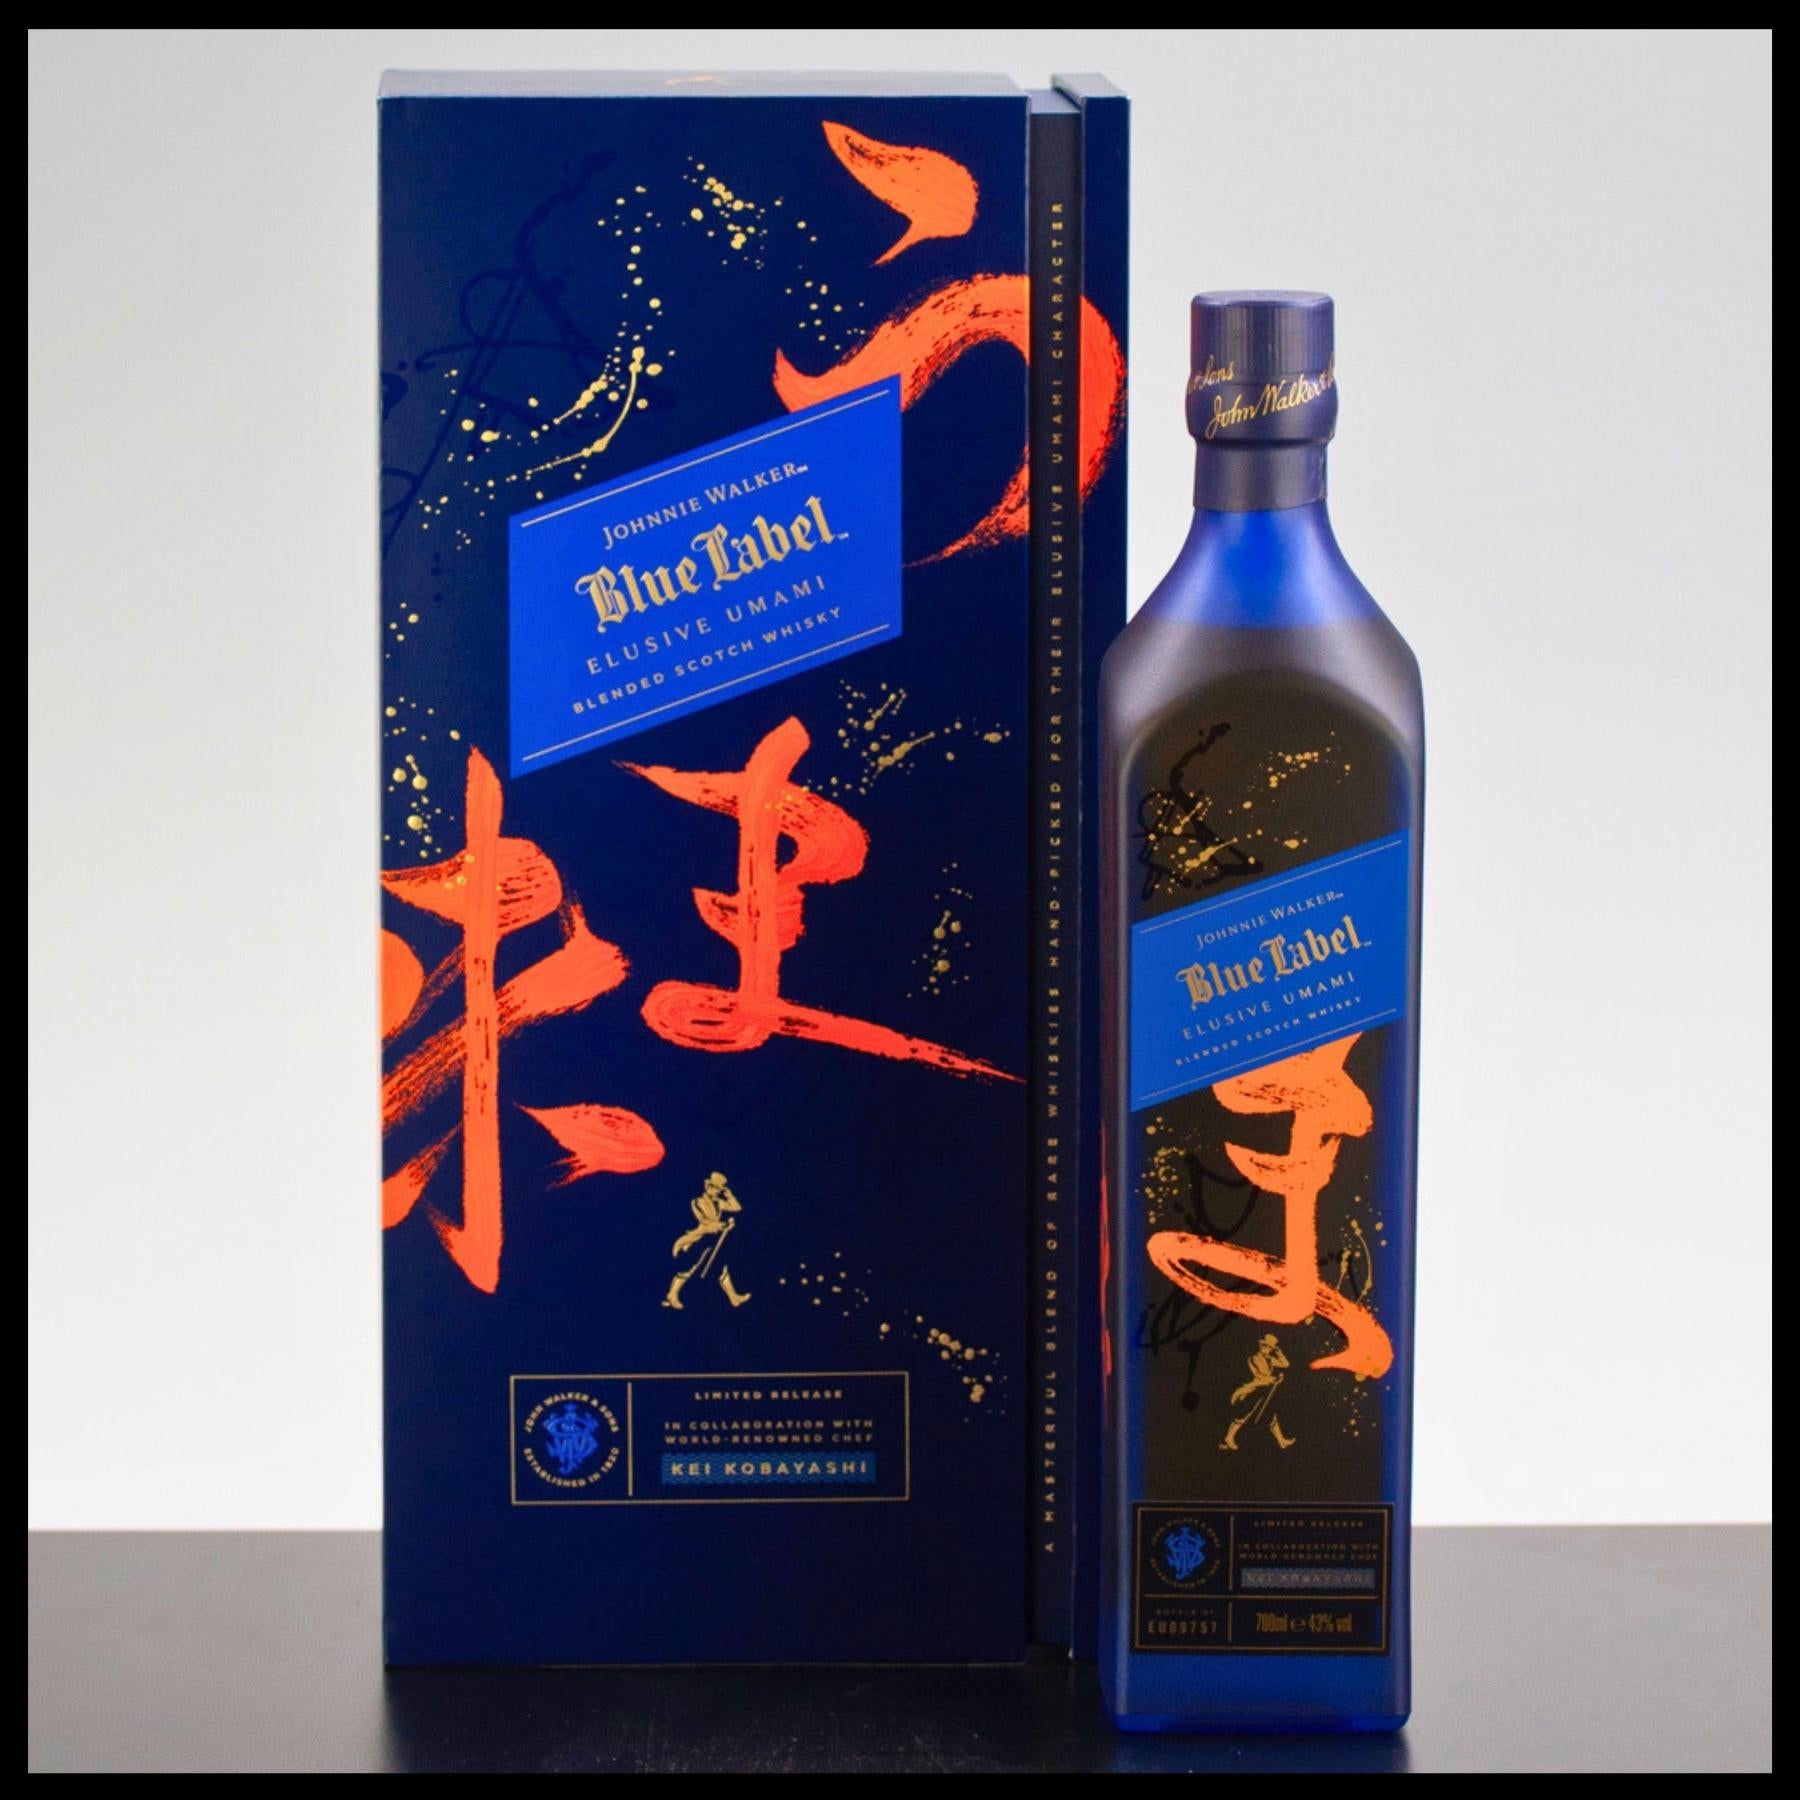 Umami In Whisky: Johnnie Walker Blue Label Elusive Umami Is A